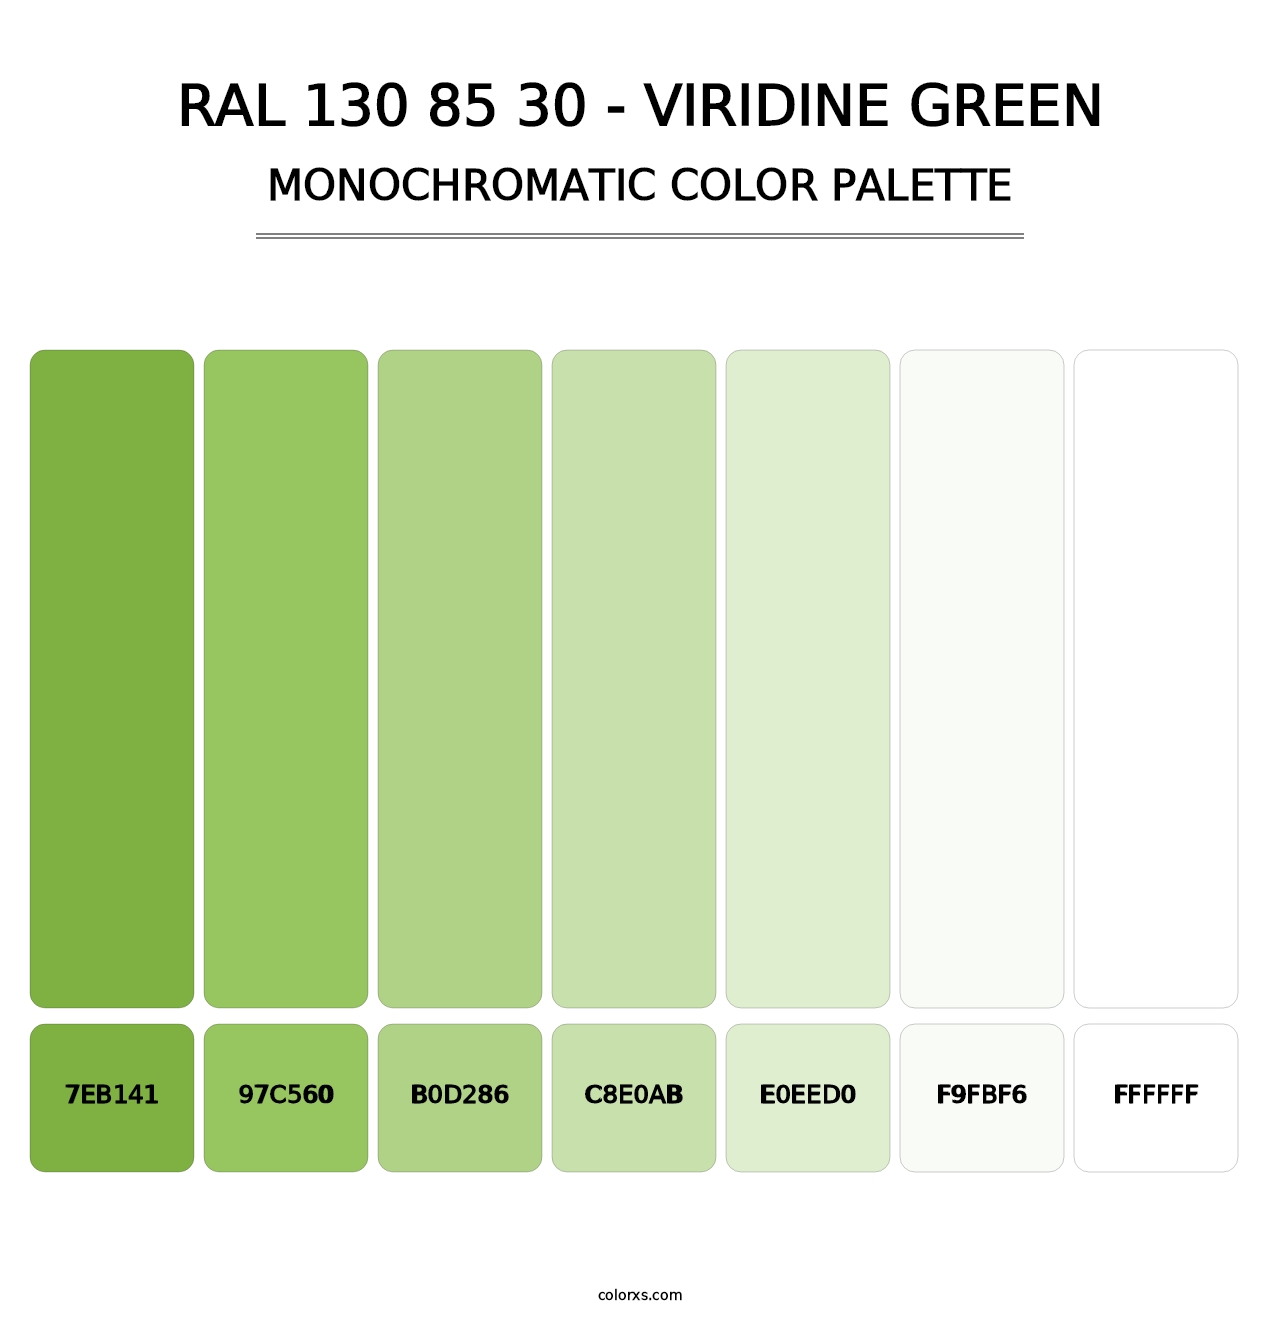 RAL 130 85 30 - Viridine Green - Monochromatic Color Palette